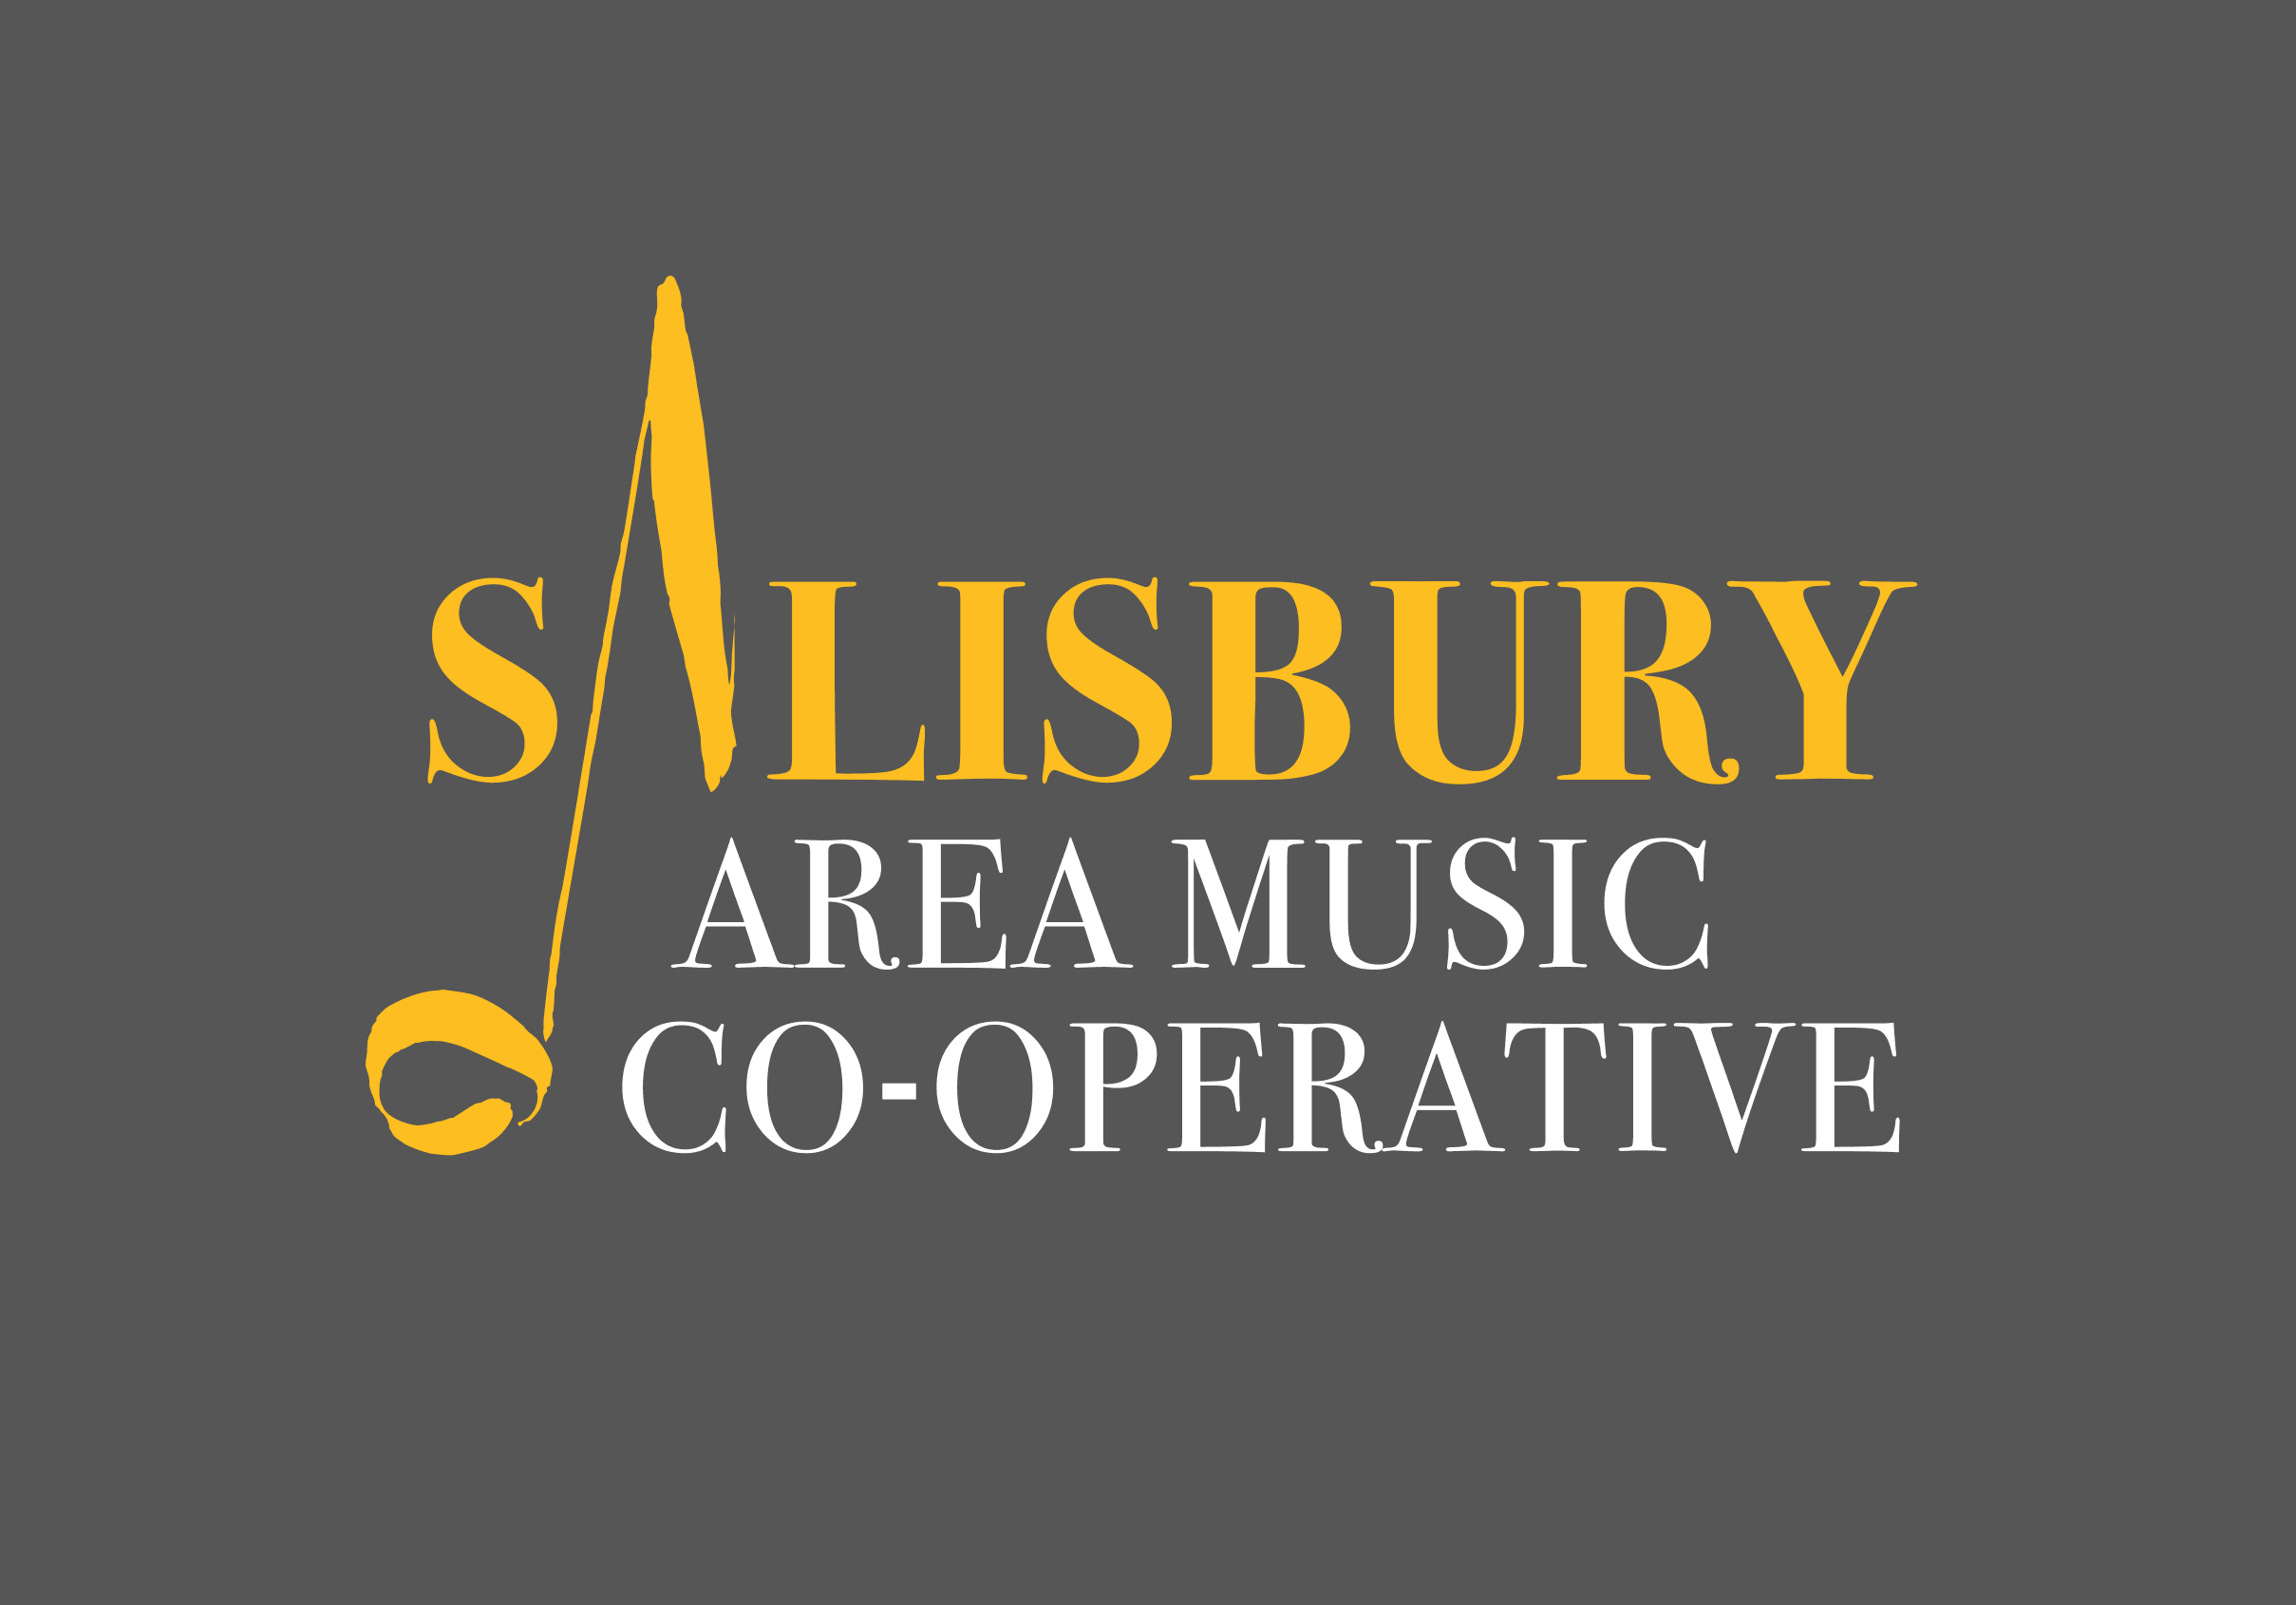 Salisbury Area Music Co-operative